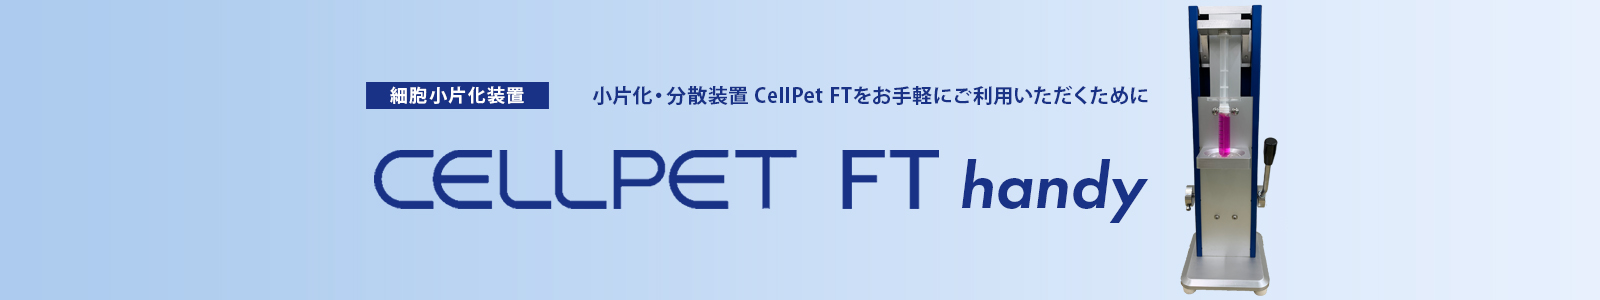 CellPet FT handy